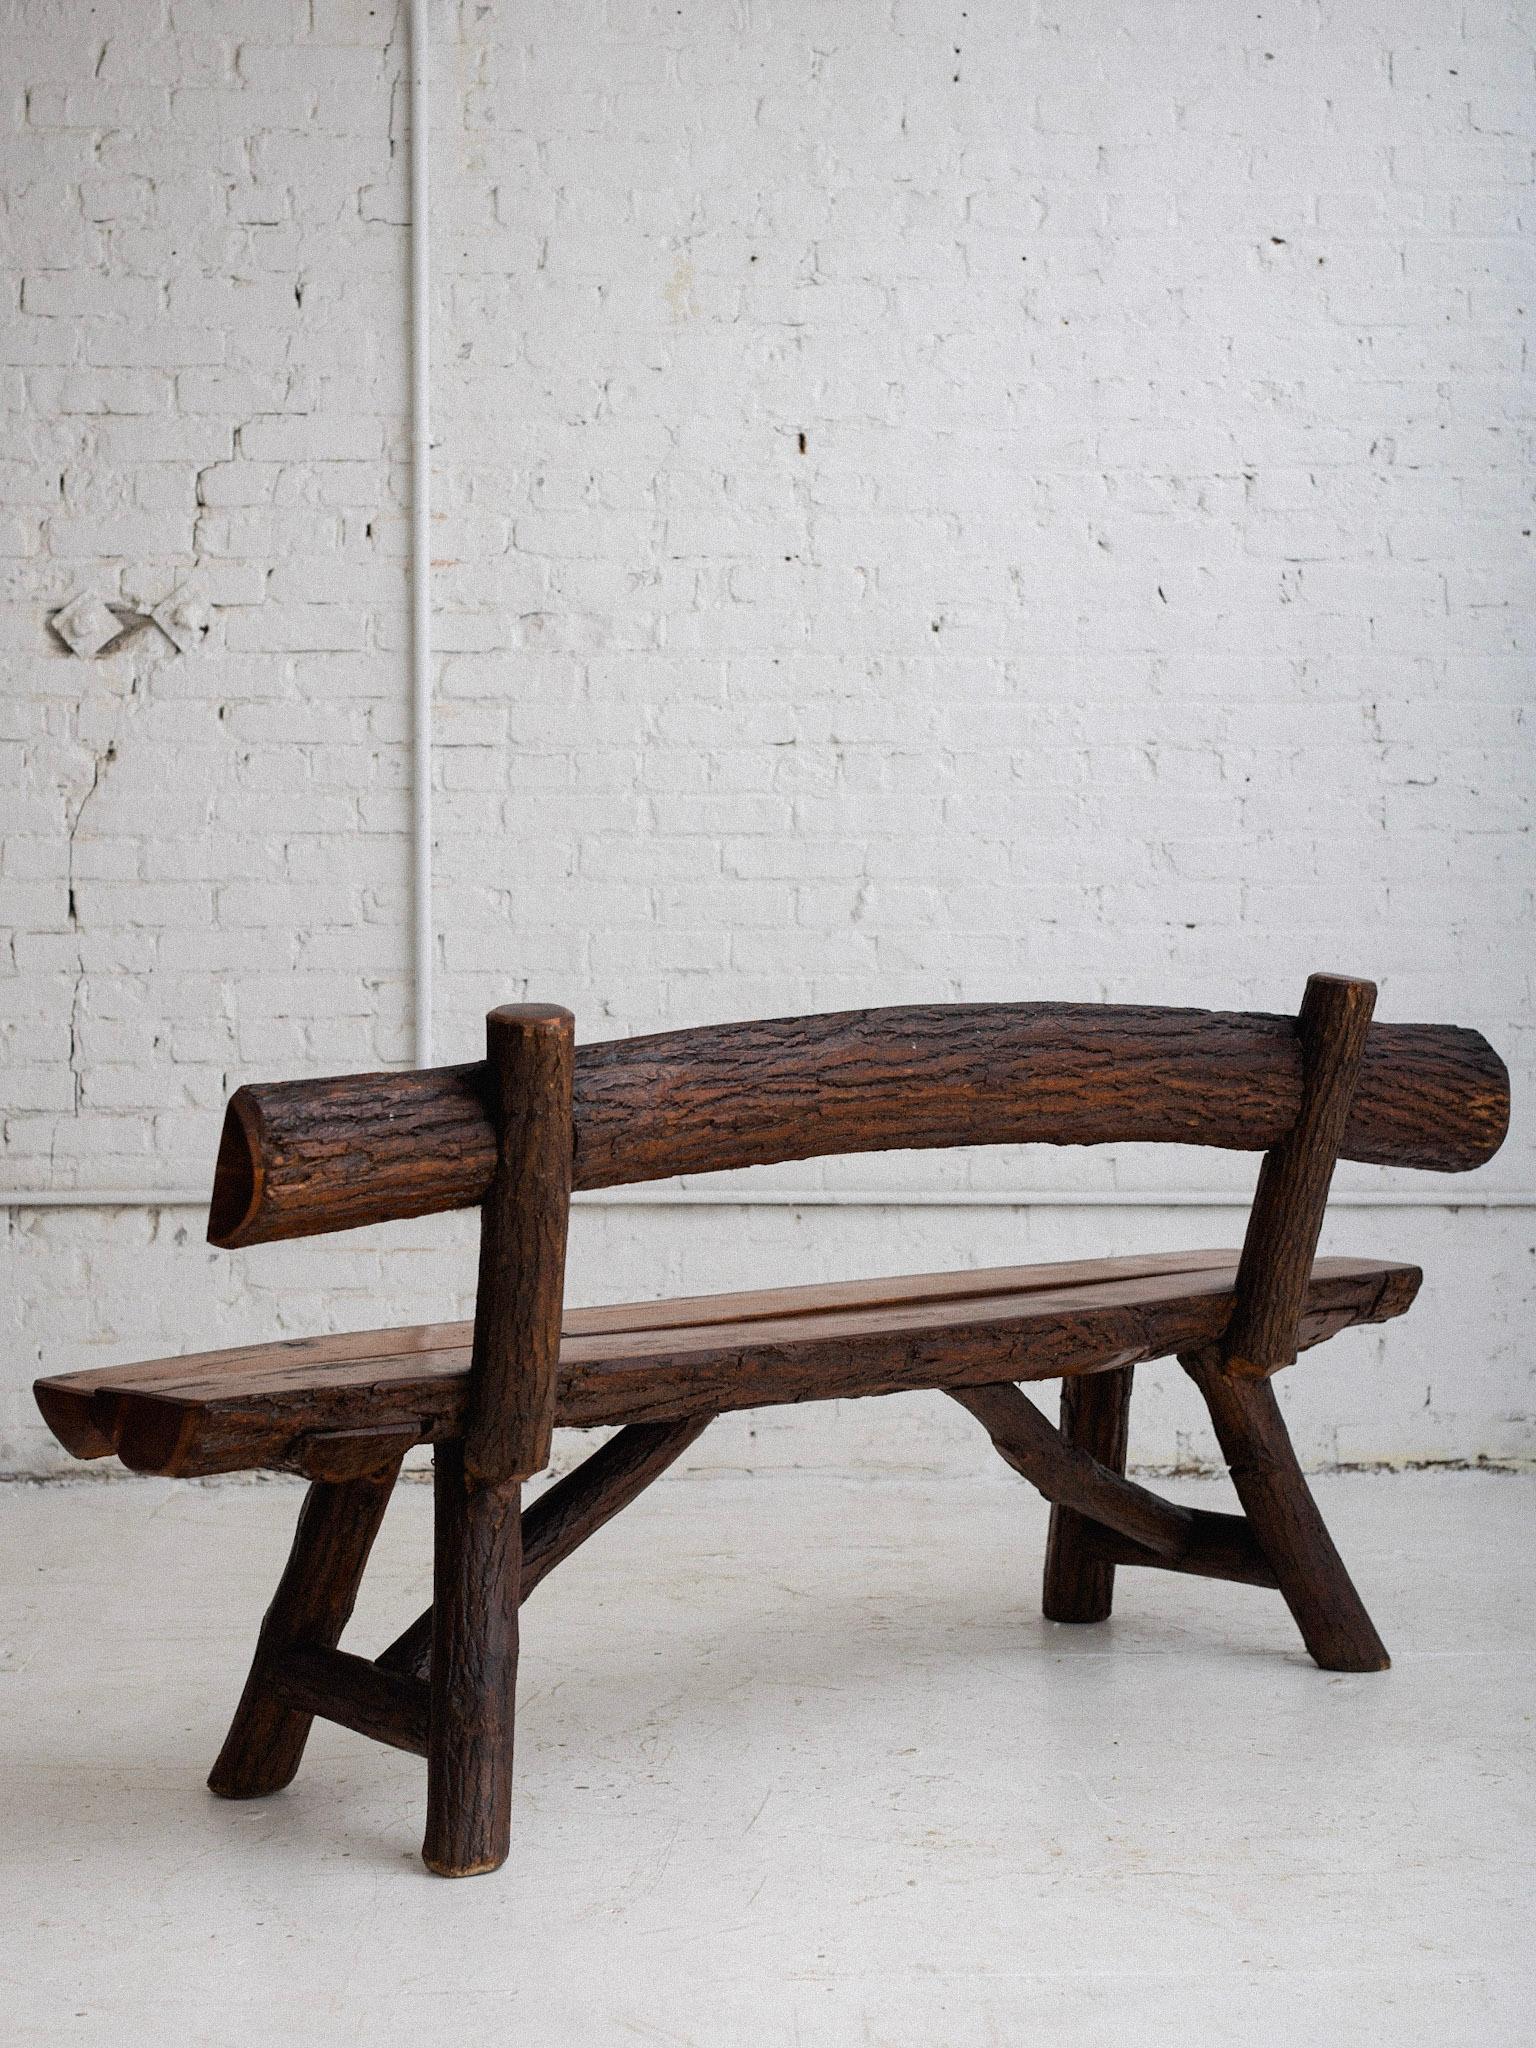 Belgian Rustic Live Edge Studio Made European Wood Bench For Sale